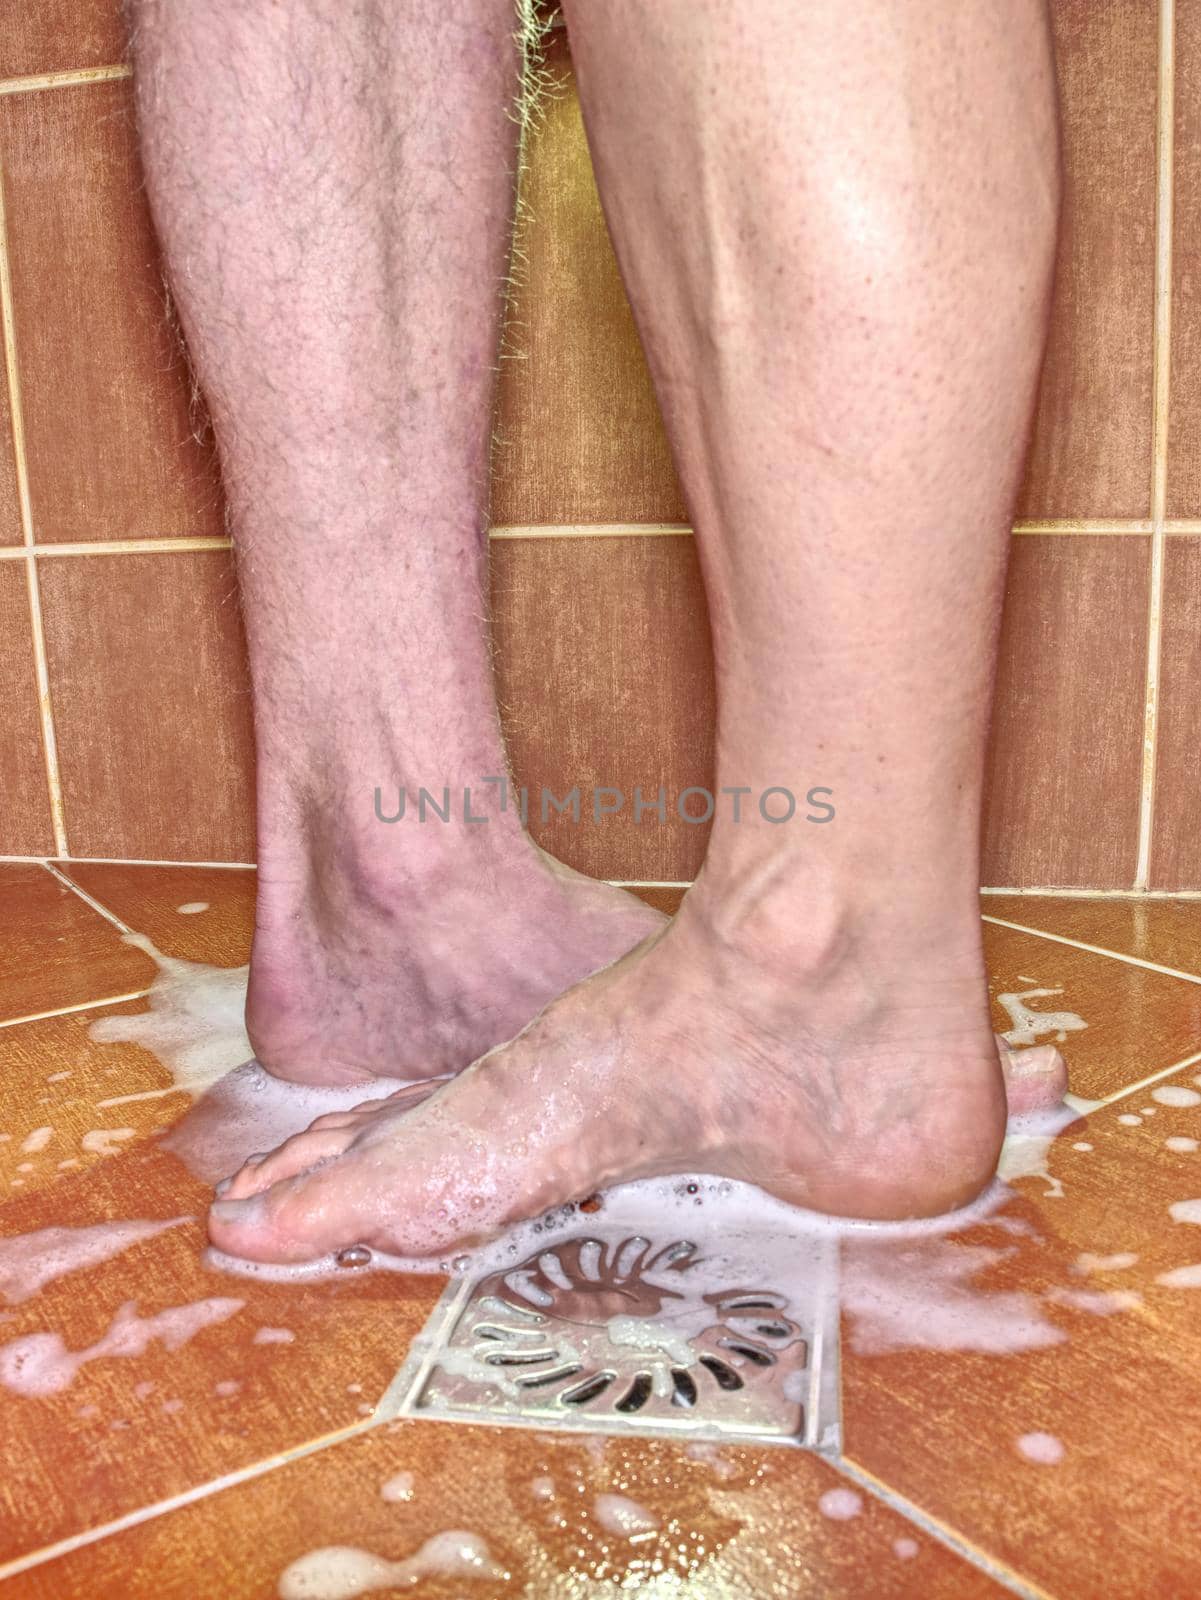 Feet of girlfriend and boyfriend in shower stall. by rdonar2